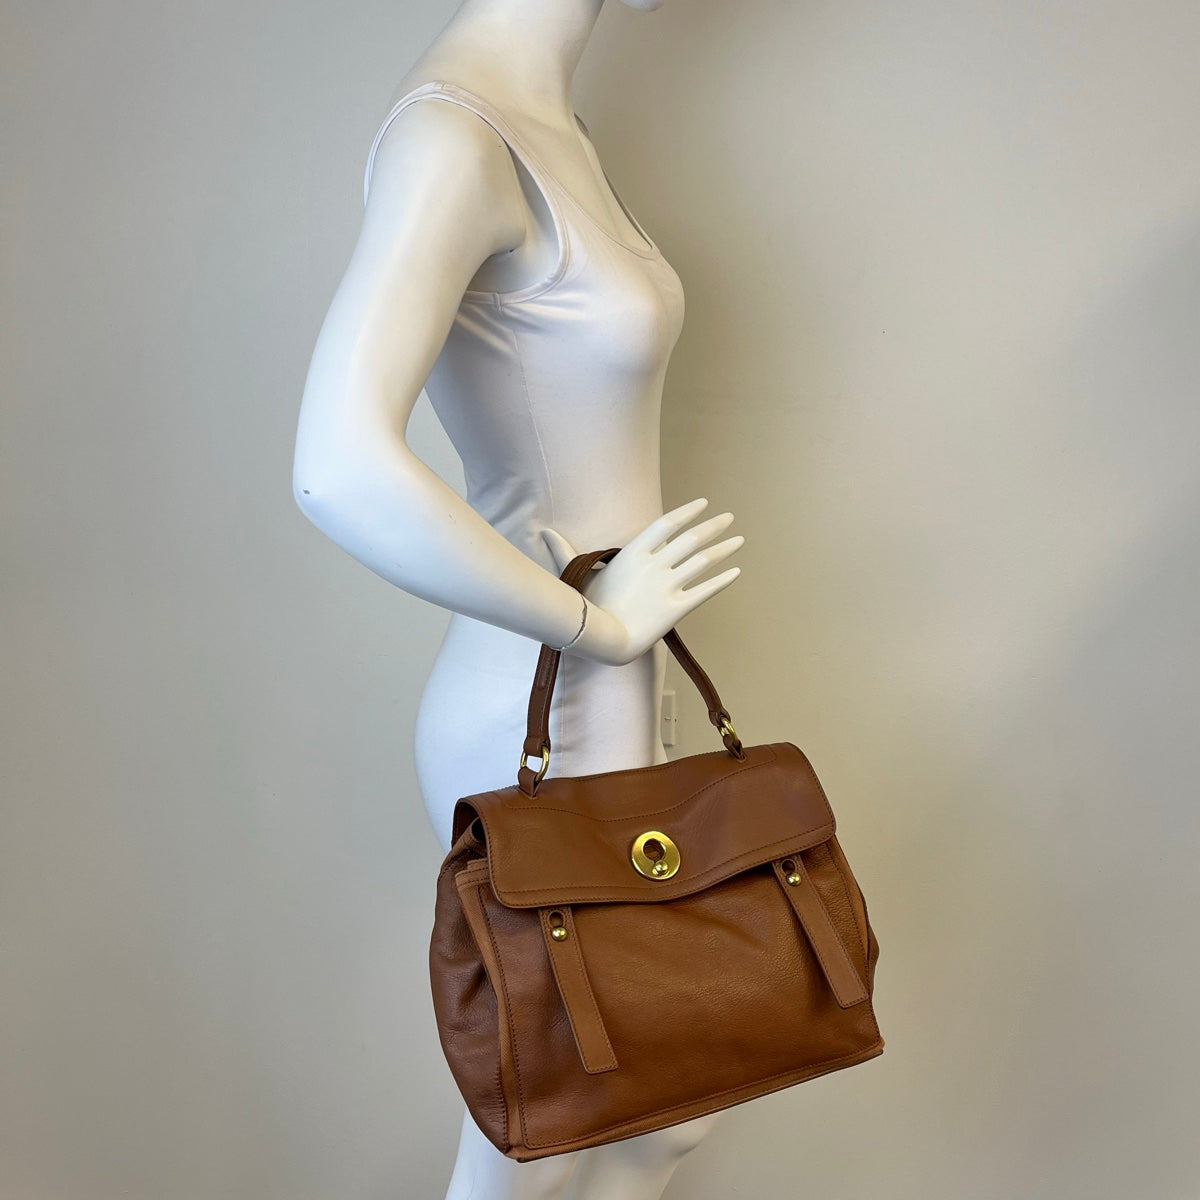 Yves Saint Laurent Handle Bag